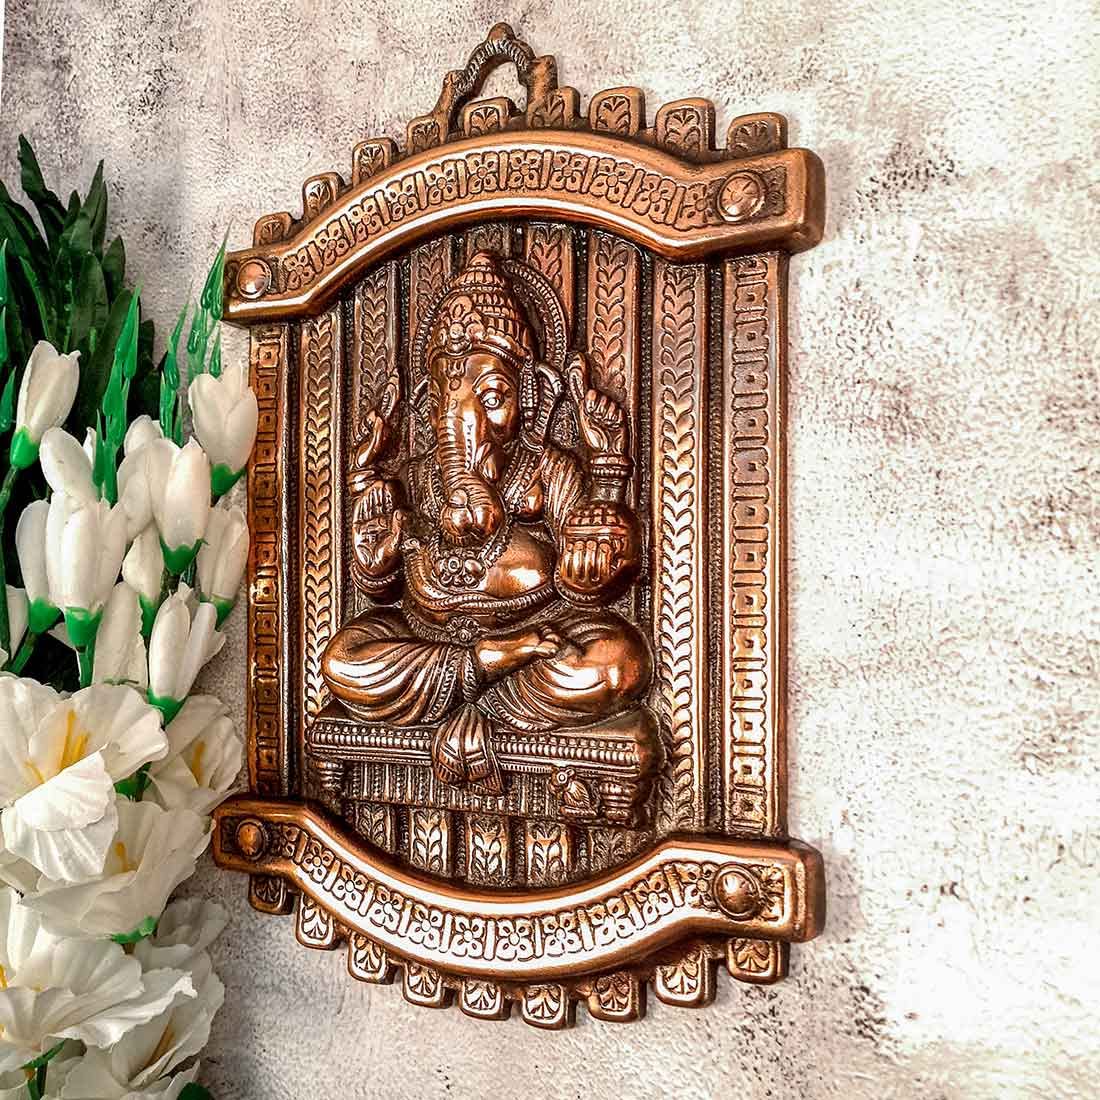 Lord Ganesha Idols for Gift Home Decor Pooja - Big Ganesh Statue - Standing  God Ganpati Showpiece